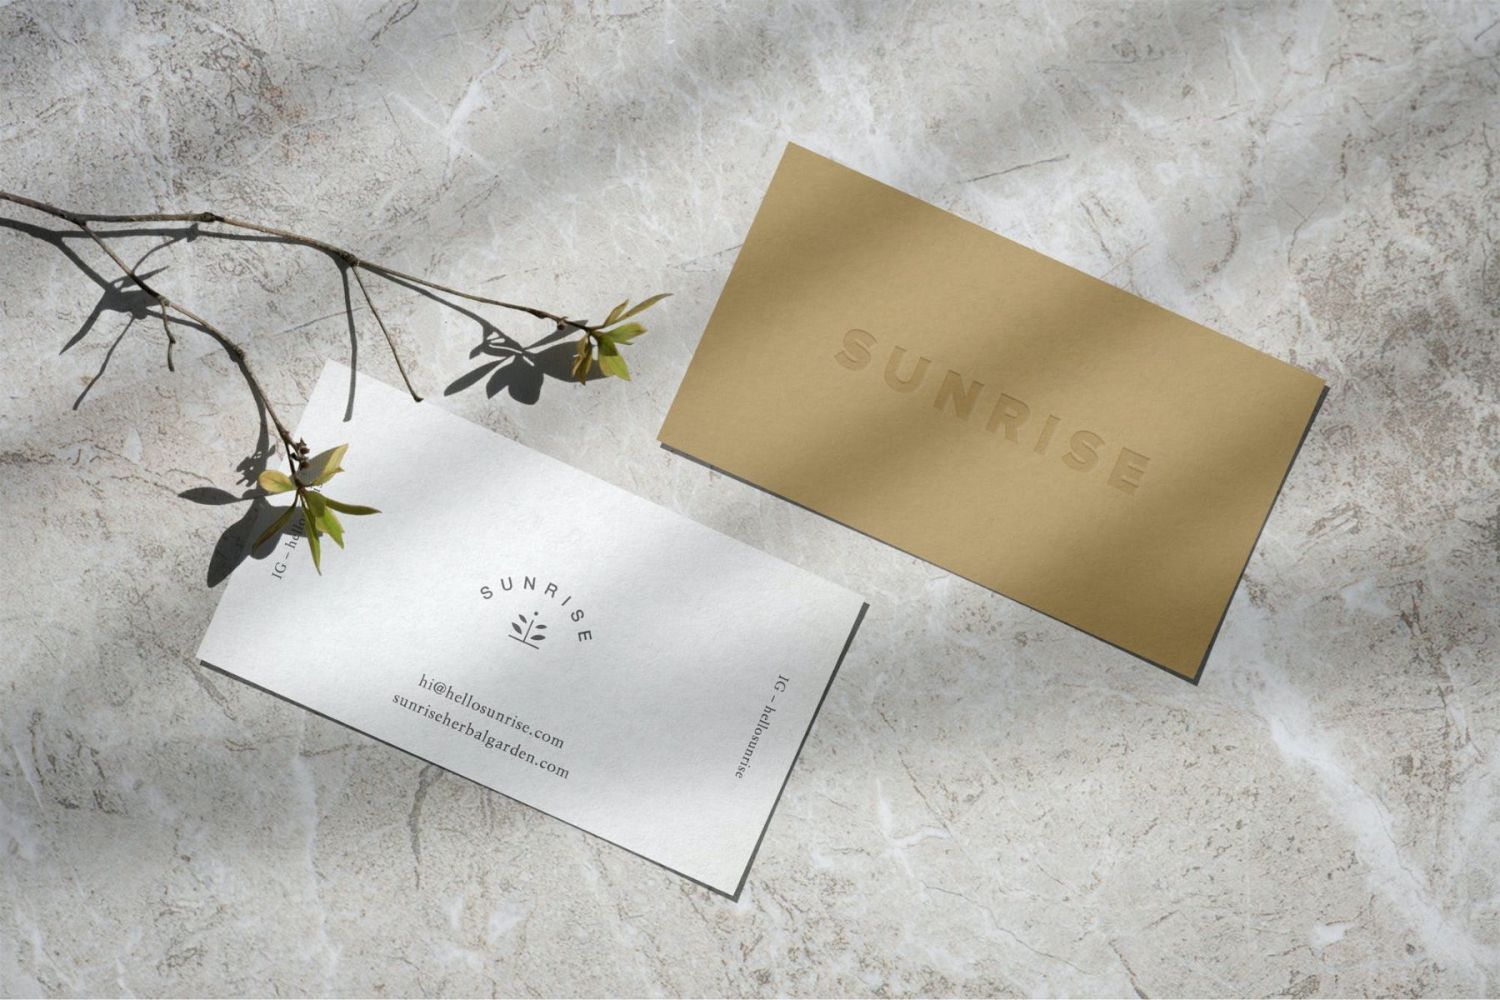 日出凸版名片样机 SUNRISE Letterpress Business Cards Mockup插图1